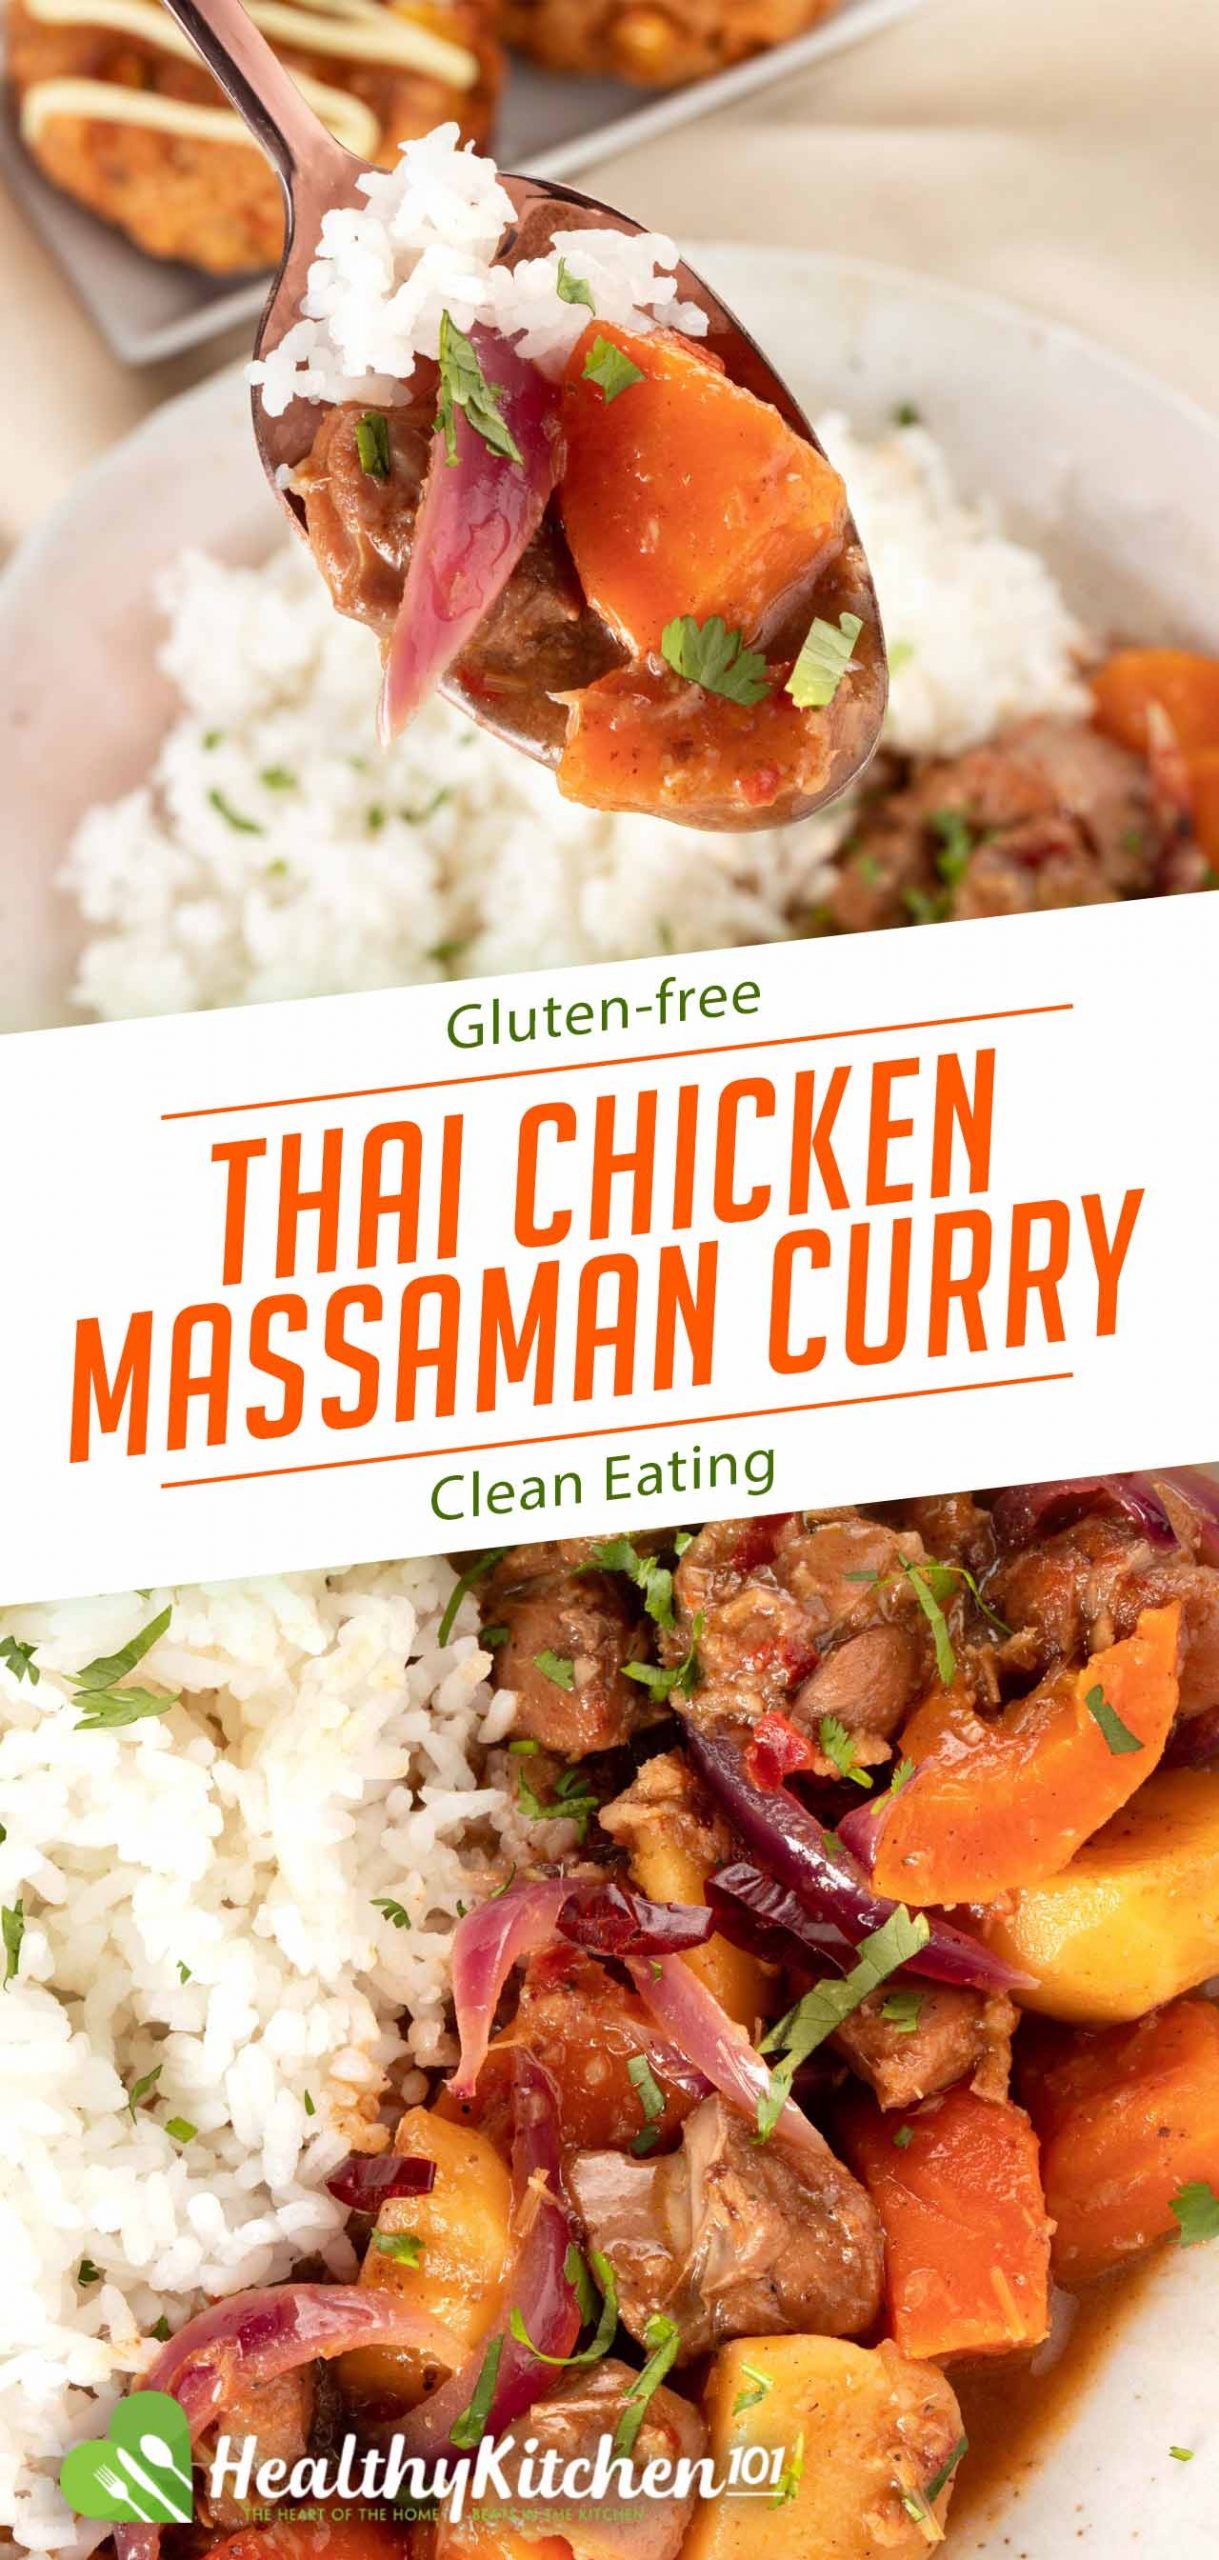 Chicken Massaman Curry Recipe
